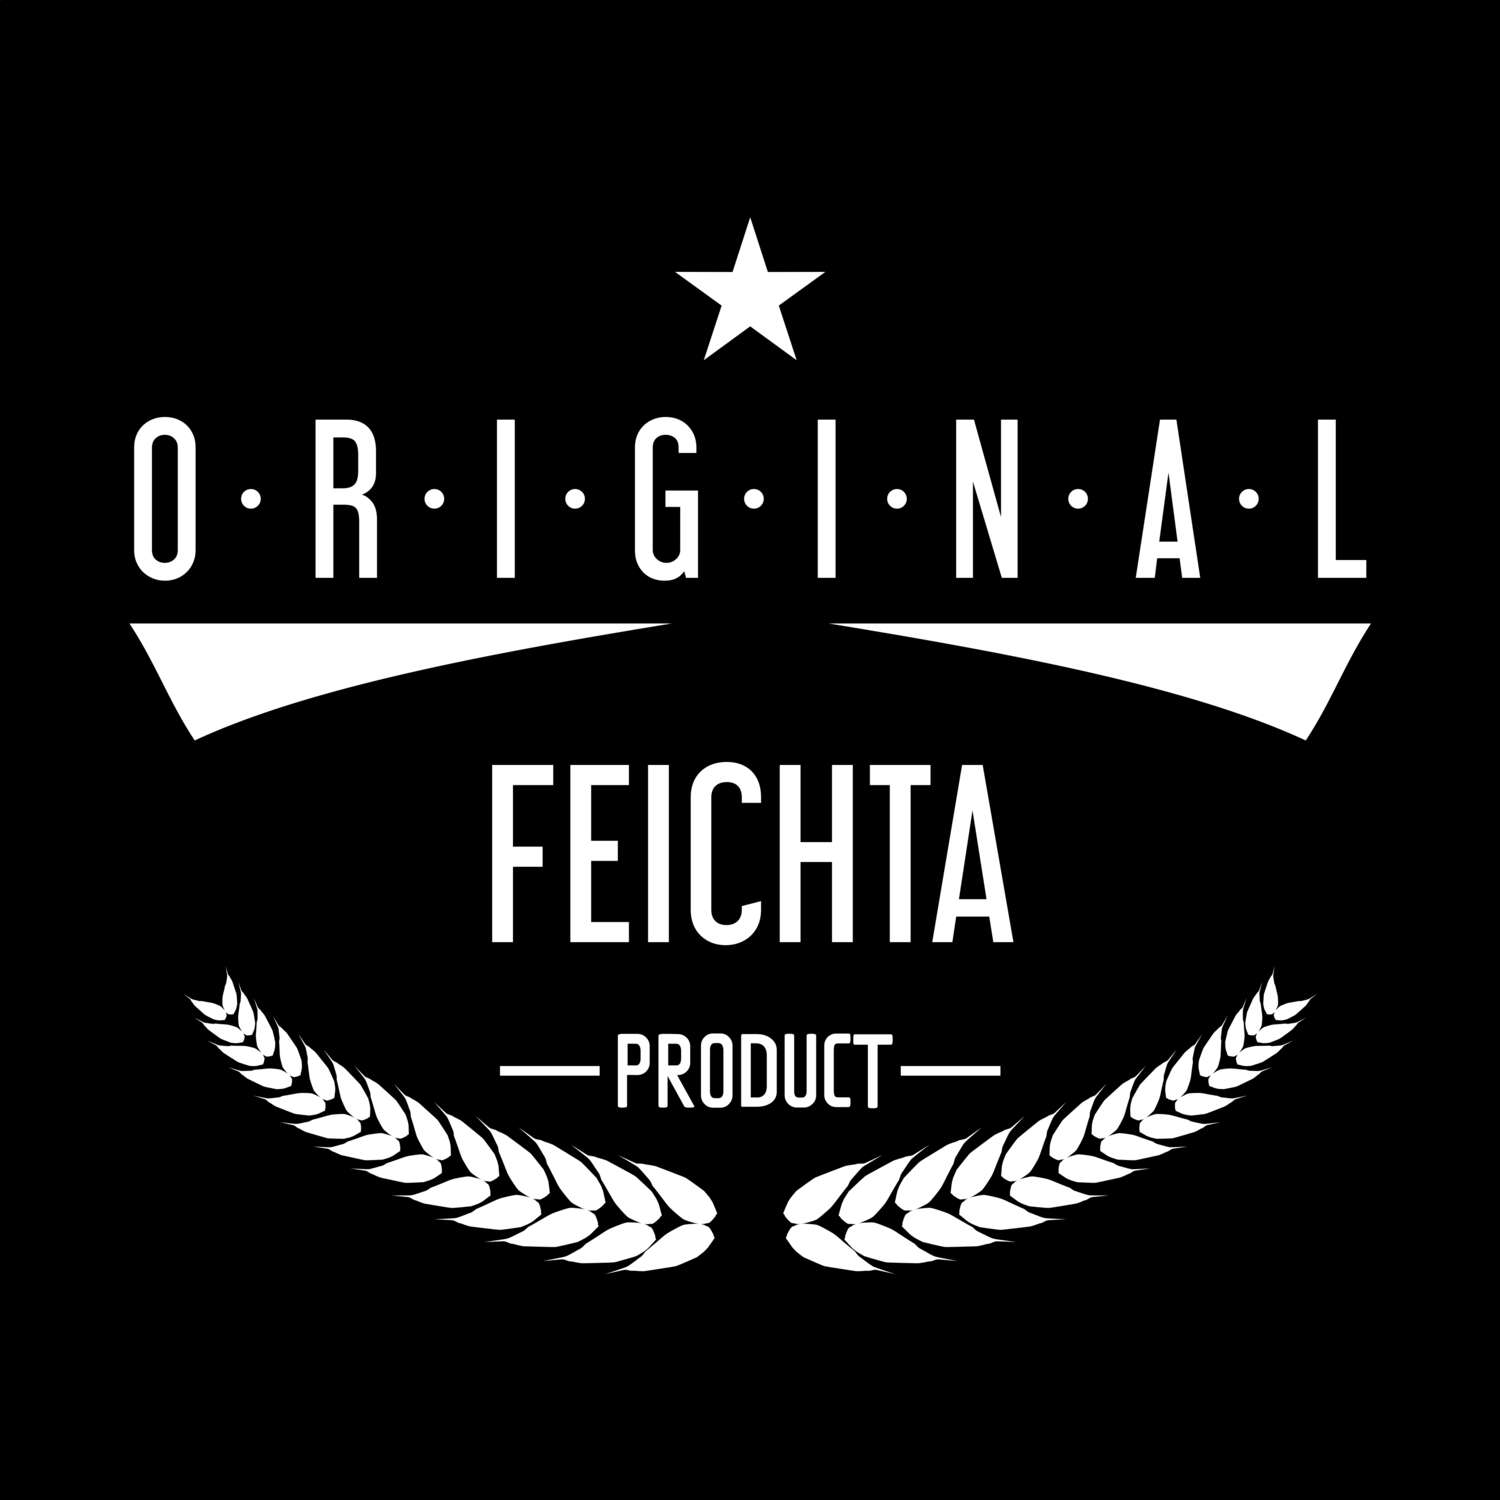 Feichta T-Shirt »Original Product«